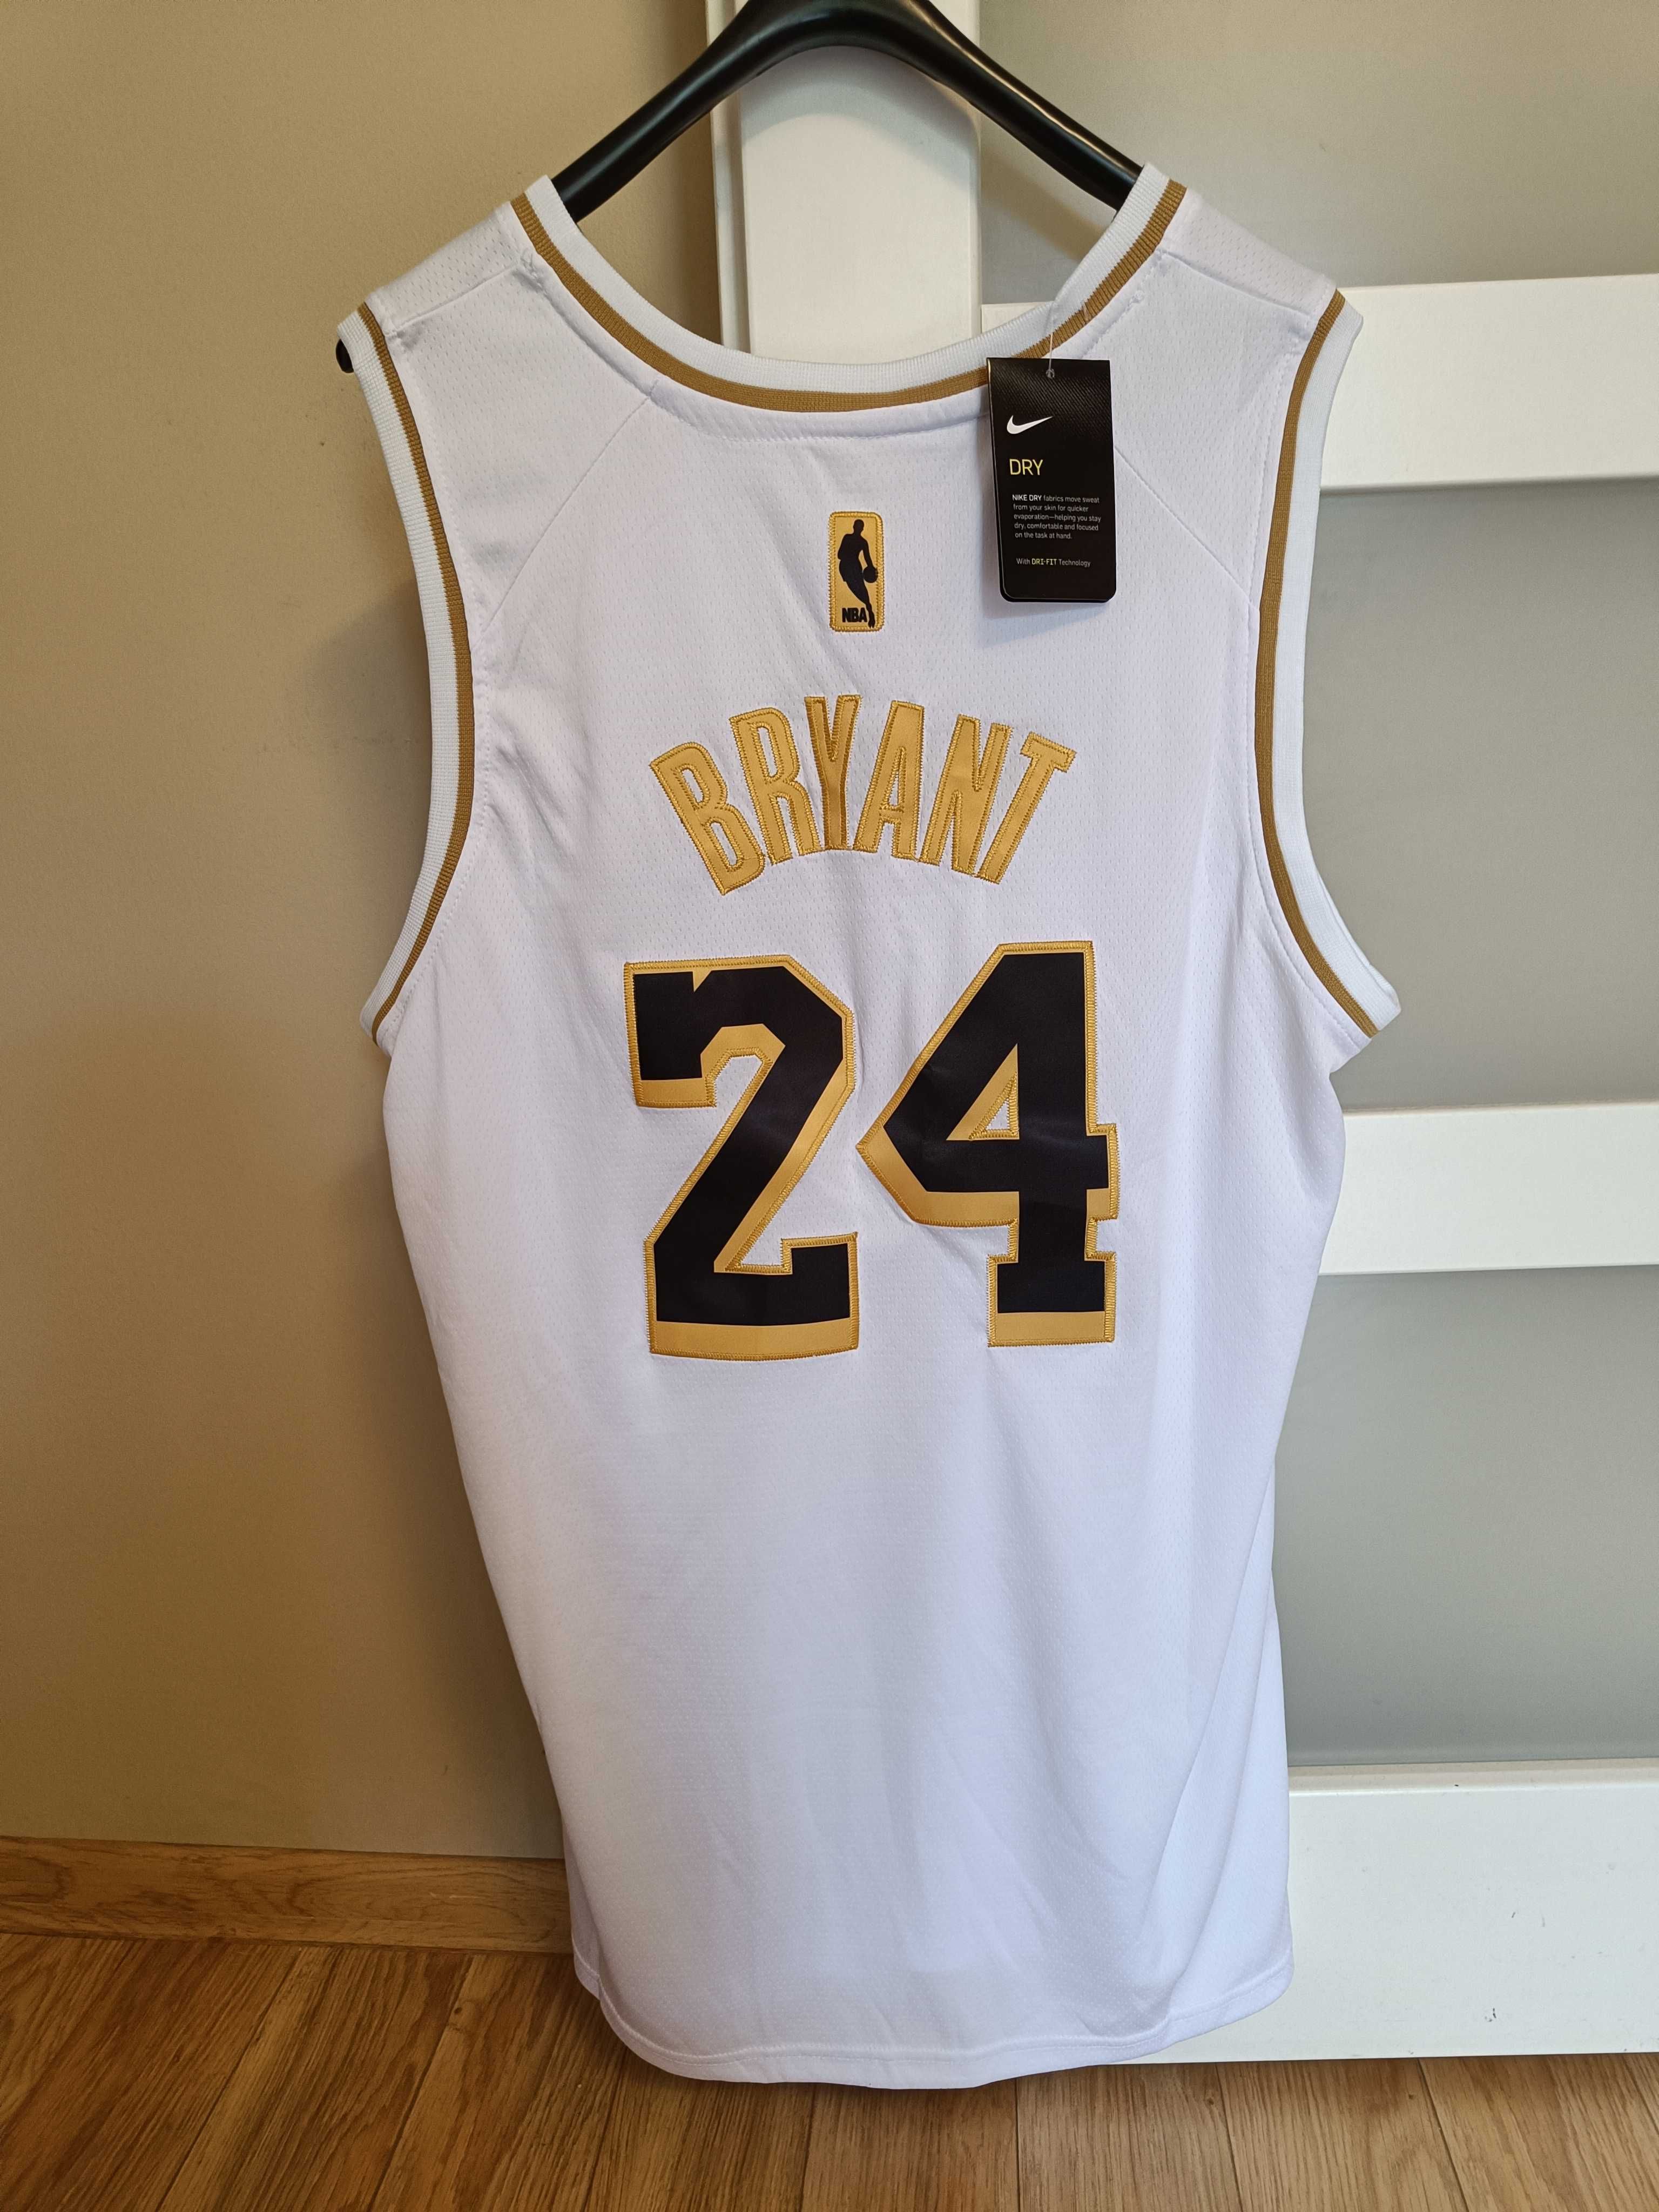 Koszulka koszykarska NBA Lakers - Bryant 24
Rozmiar: XL